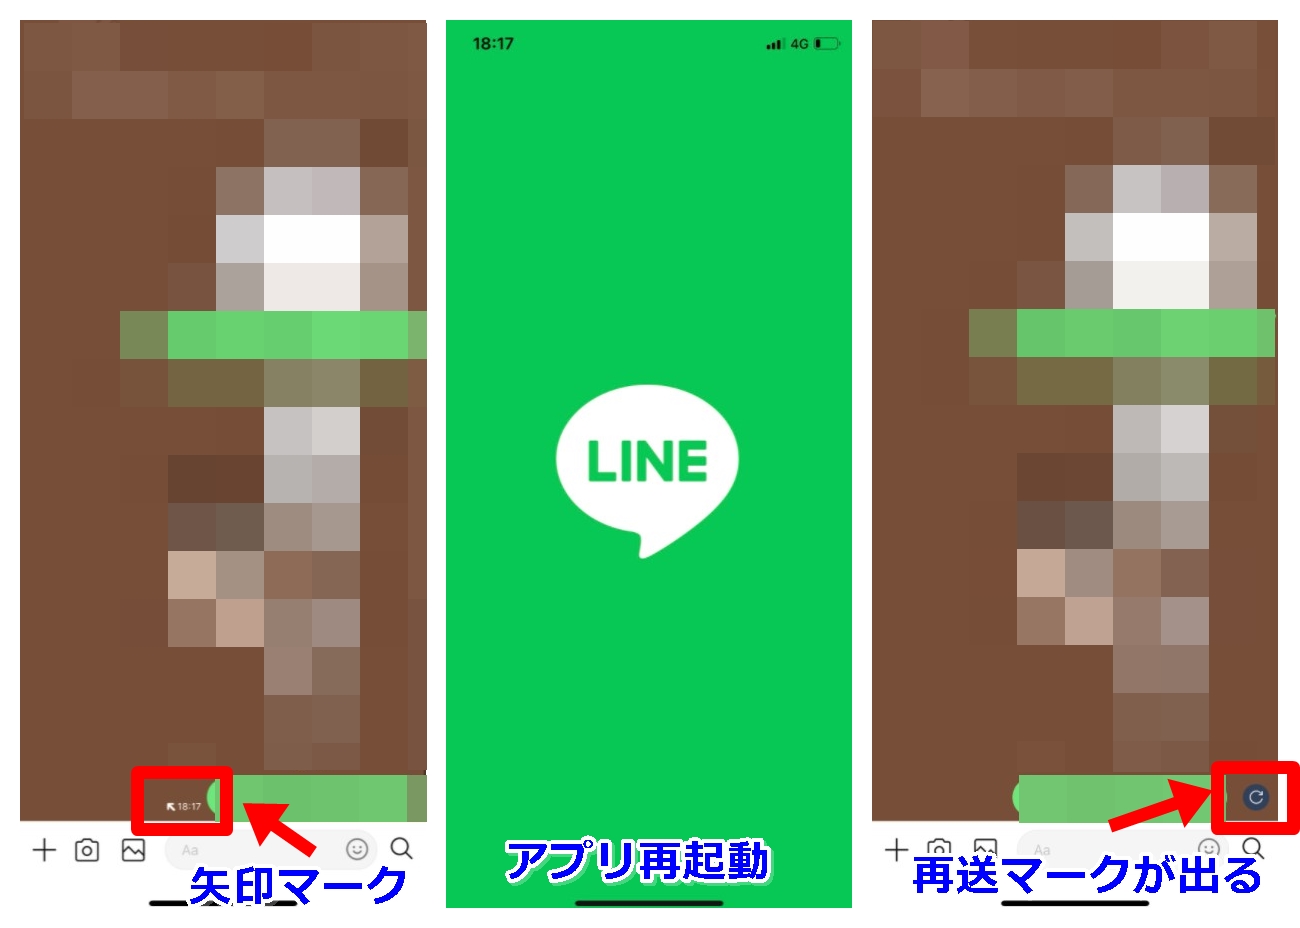 Line メッセージが送れなくて矢印や再送マークが出ている時の対処法 Lineアプリの使い方 疑問解決マニュアル Line活用ガイド